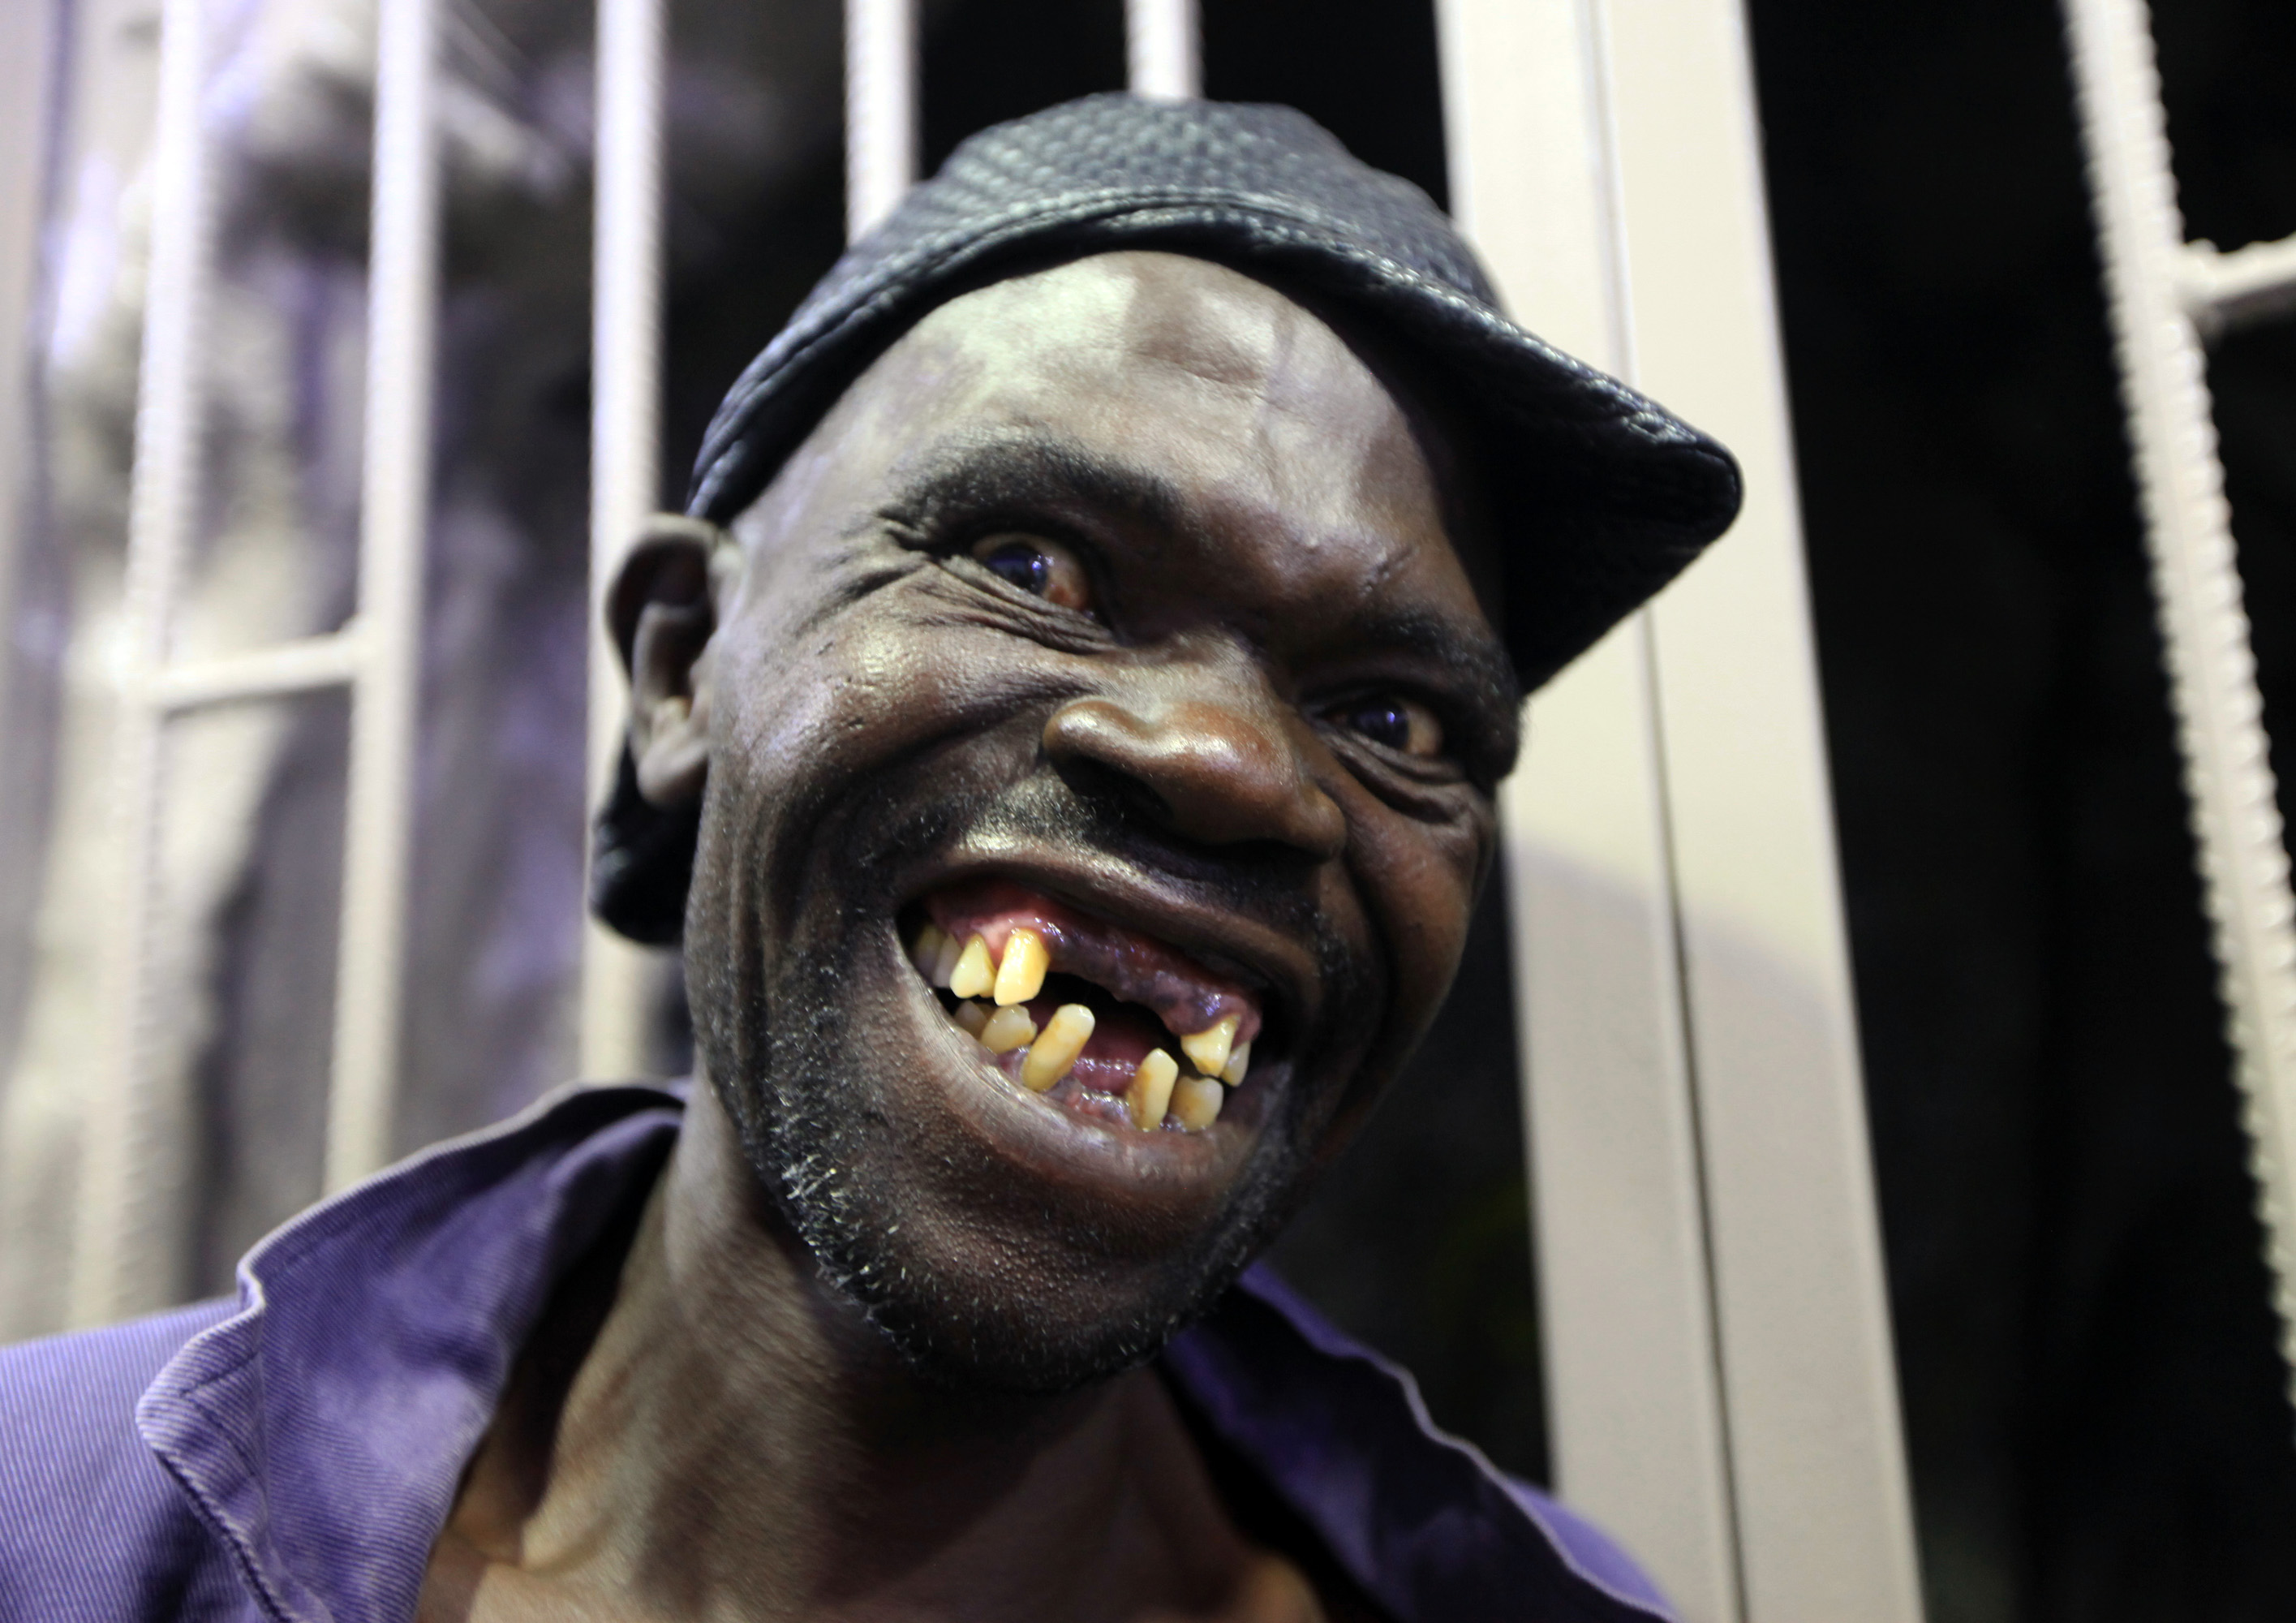 Mison Sere smiles after winning the 2015 Mr. Ugly competition in Harare, Zimbabwe, on Nov. 21, 2015 (Tsvangirayi Mukwazhi—AP)